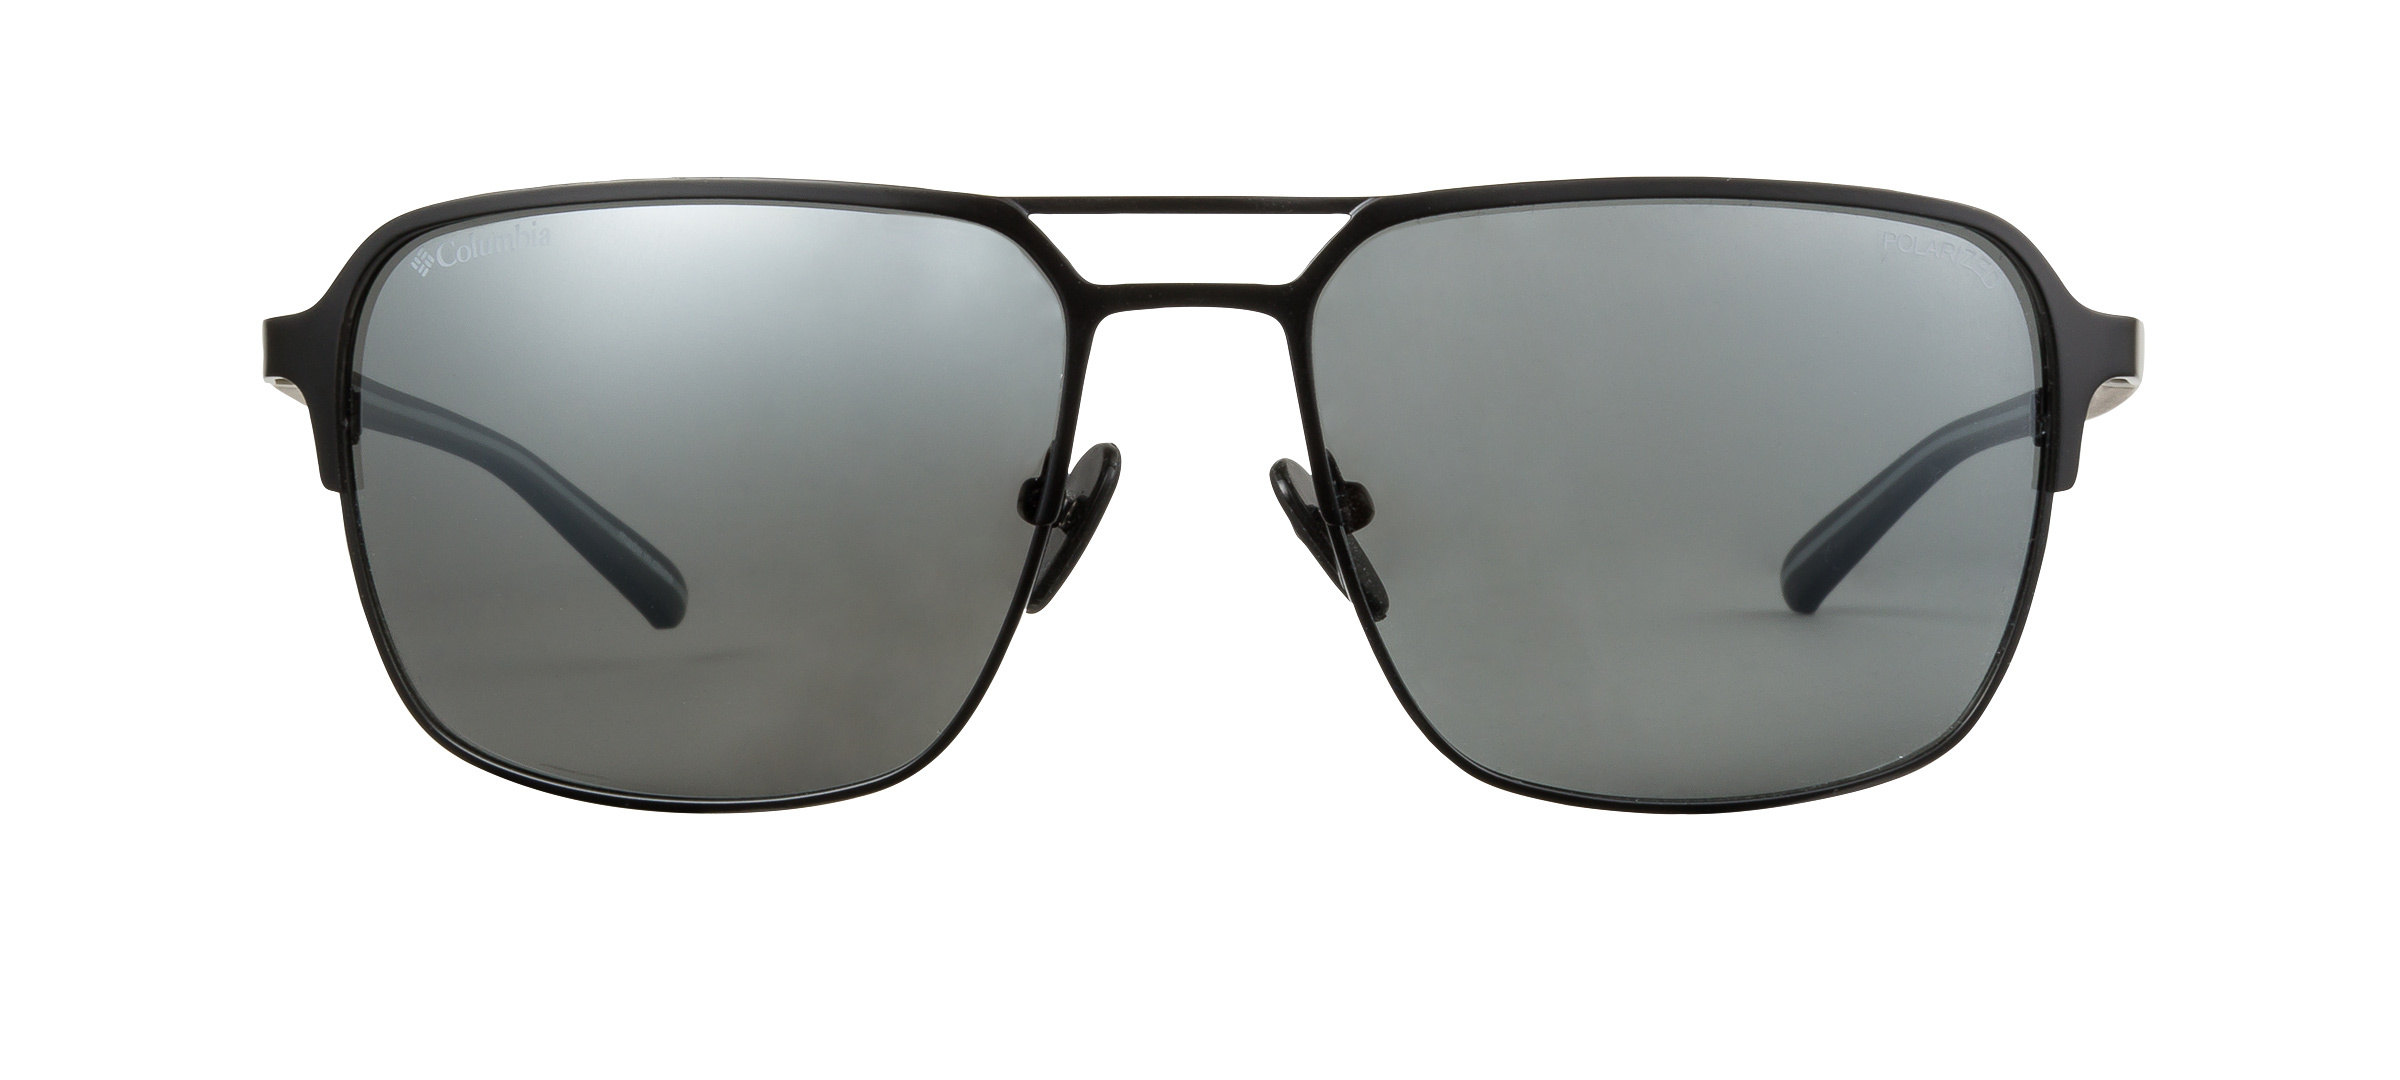 Sunglasses - buy sunglasses online for less | Coastal